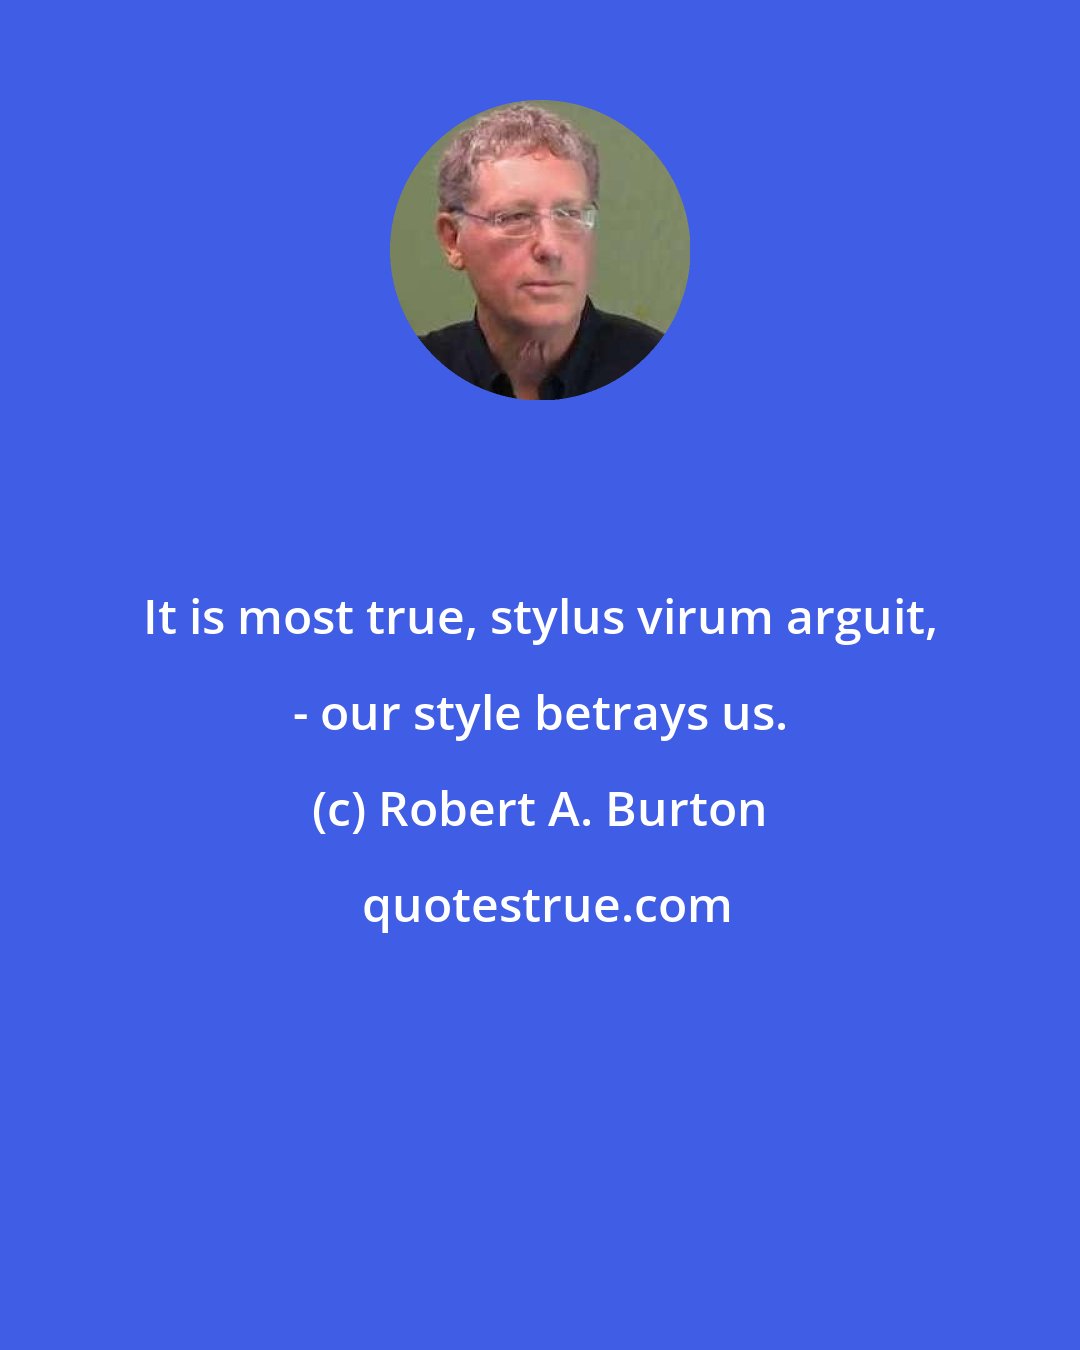 Robert A. Burton: It is most true, stylus virum arguit, - our style betrays us.